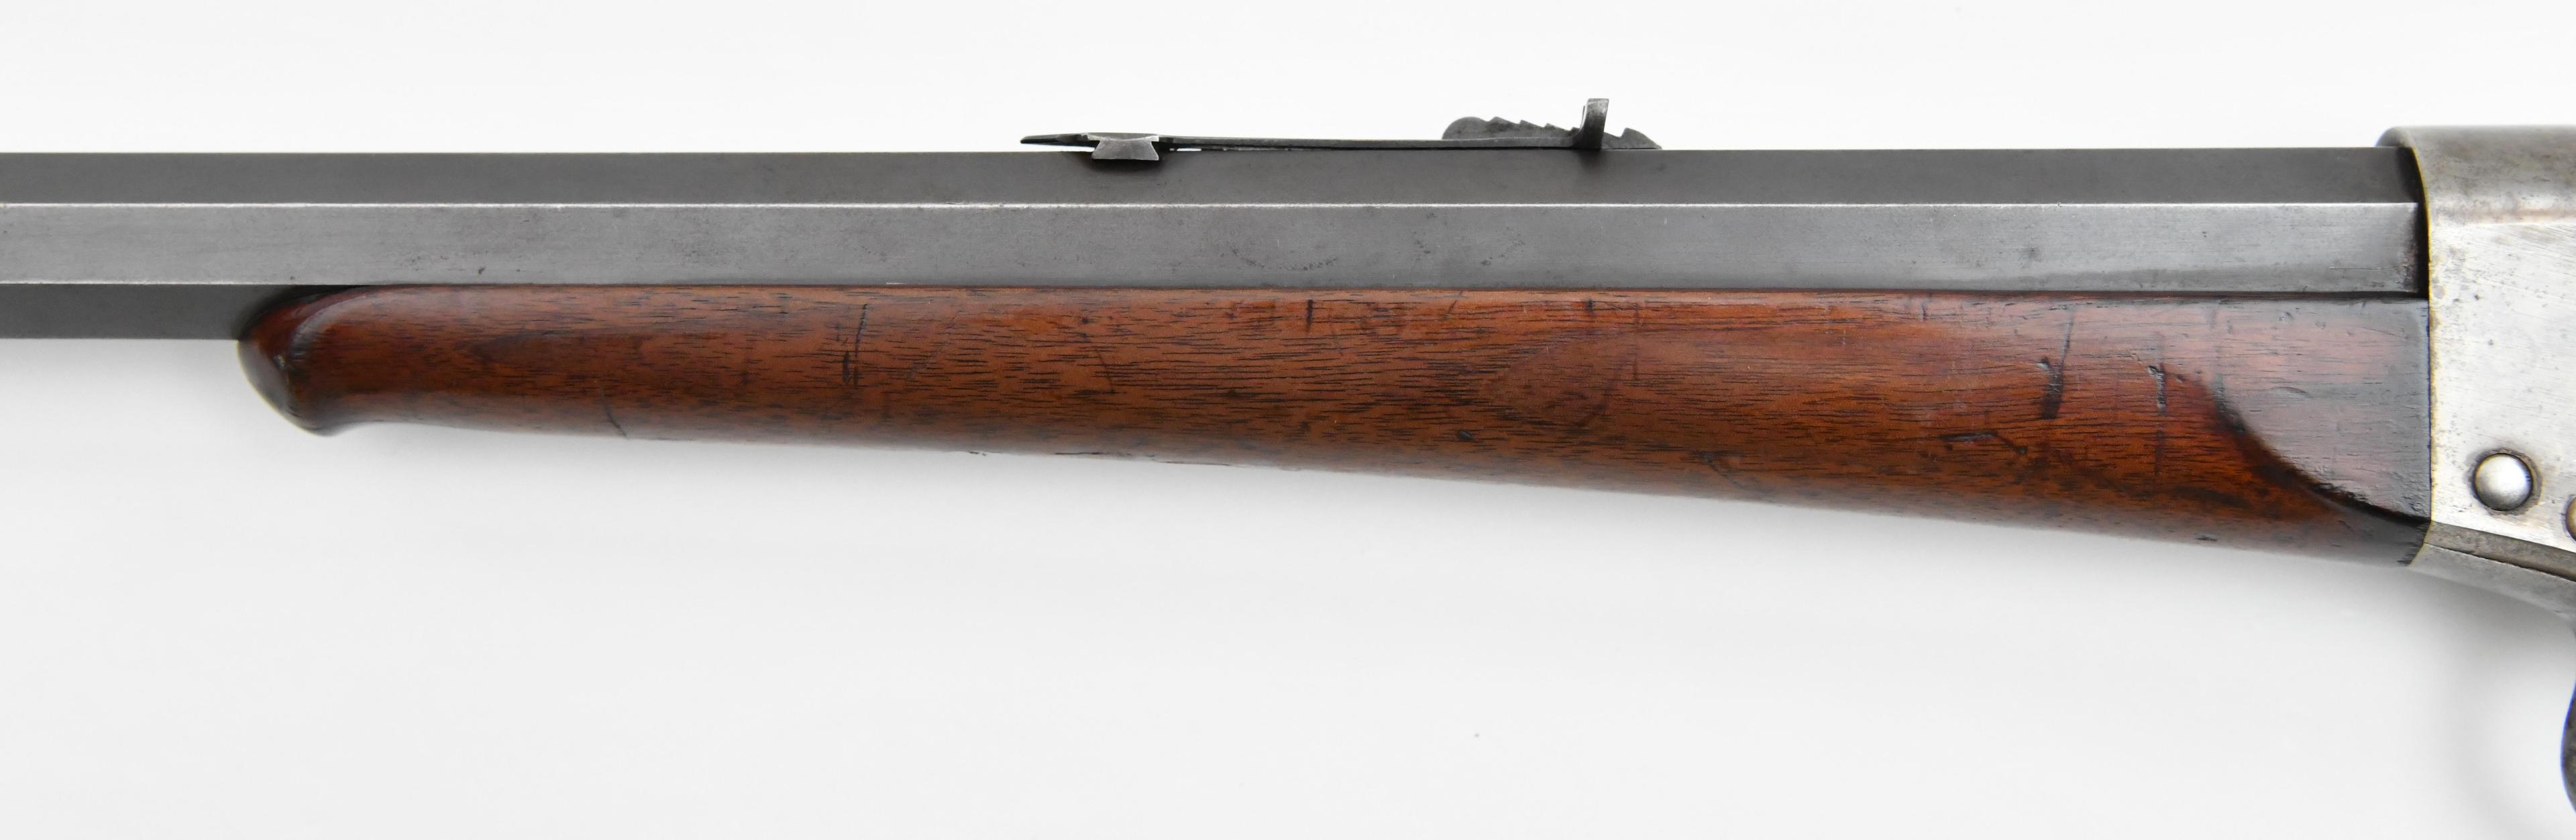 Remington-Hepburn No. 3 Sporting Model rifle